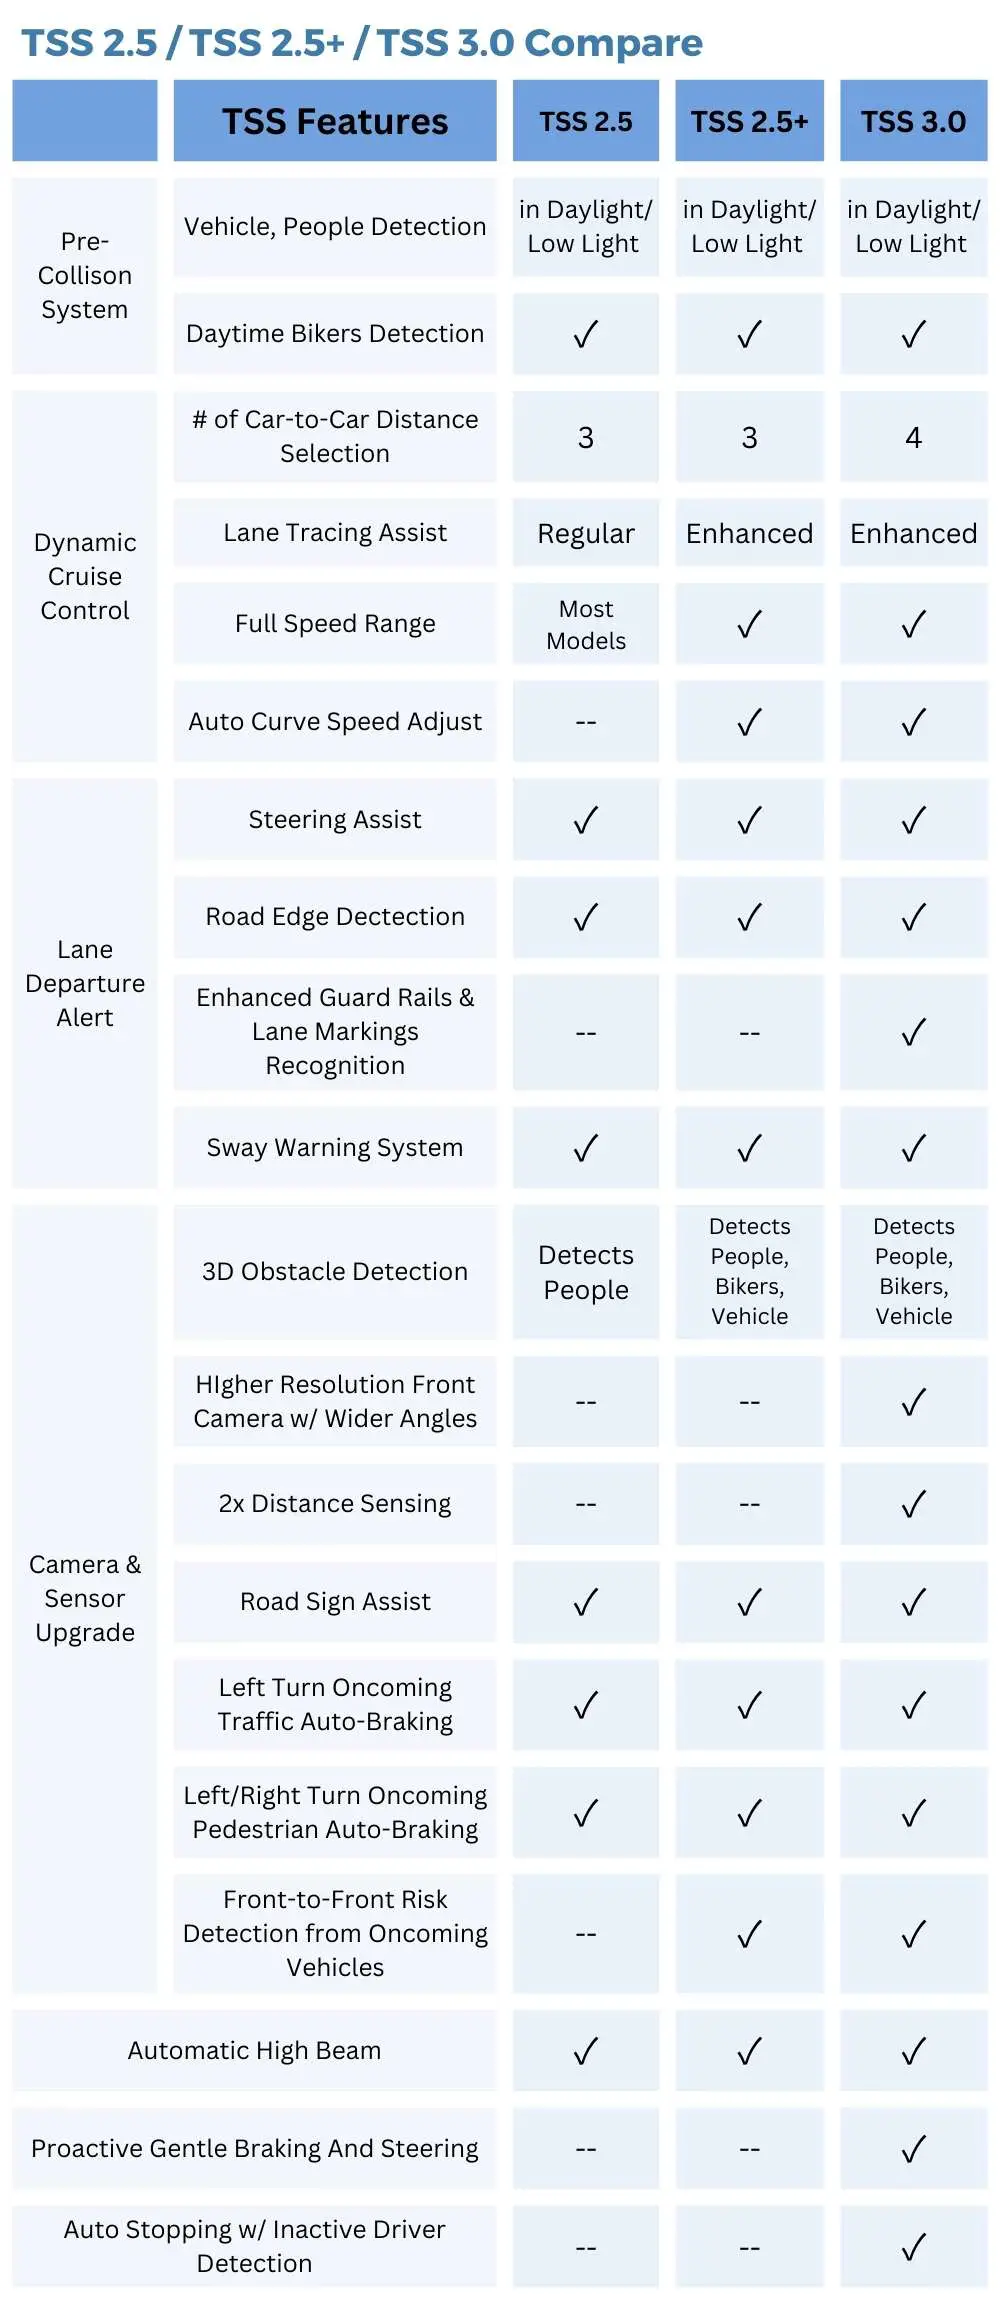 Toyota Safety Sense 2.5, 2.5+, and Toyota Safety Sense 3.0 Compare TSS 3.0, TSS 2.5